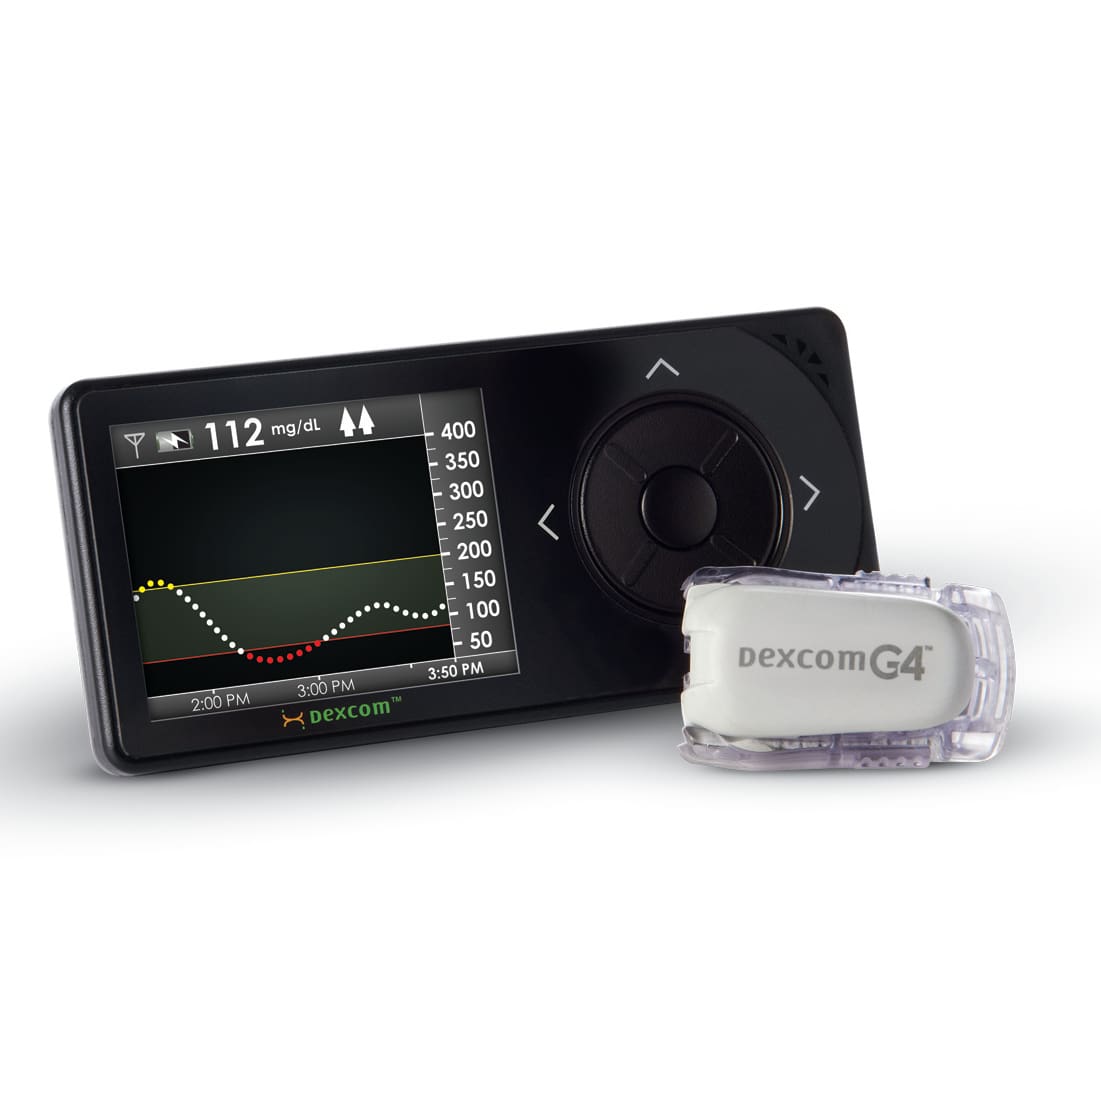 DexCom's Continuous Glucose Monitor